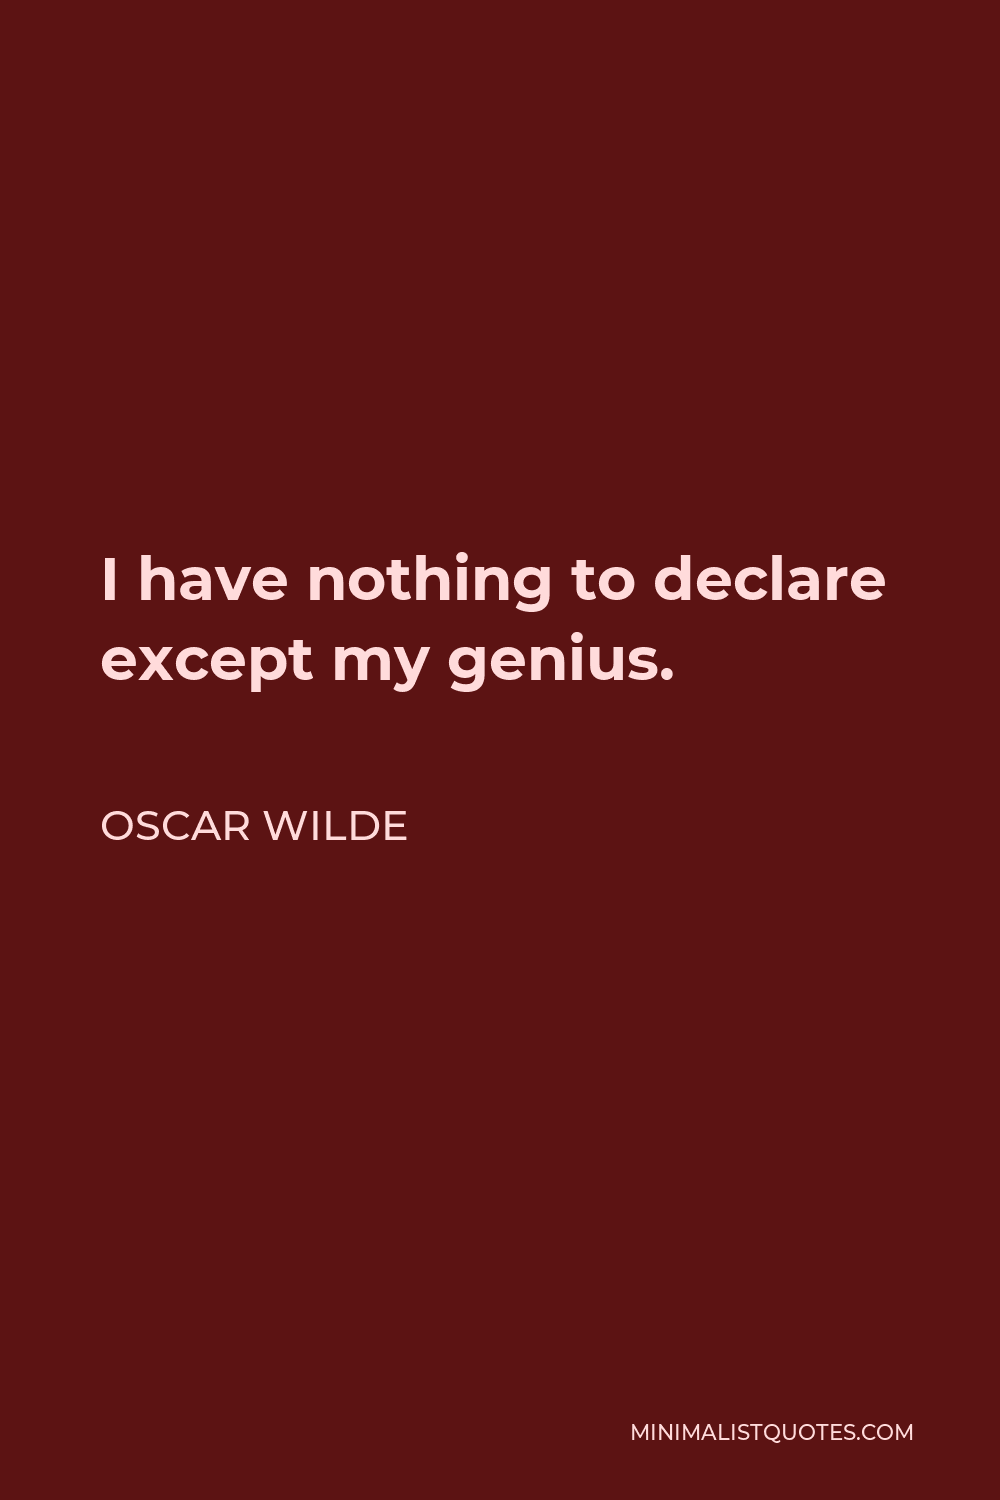 Oscar Wilde Quote - I have nothing to declare except my genius.